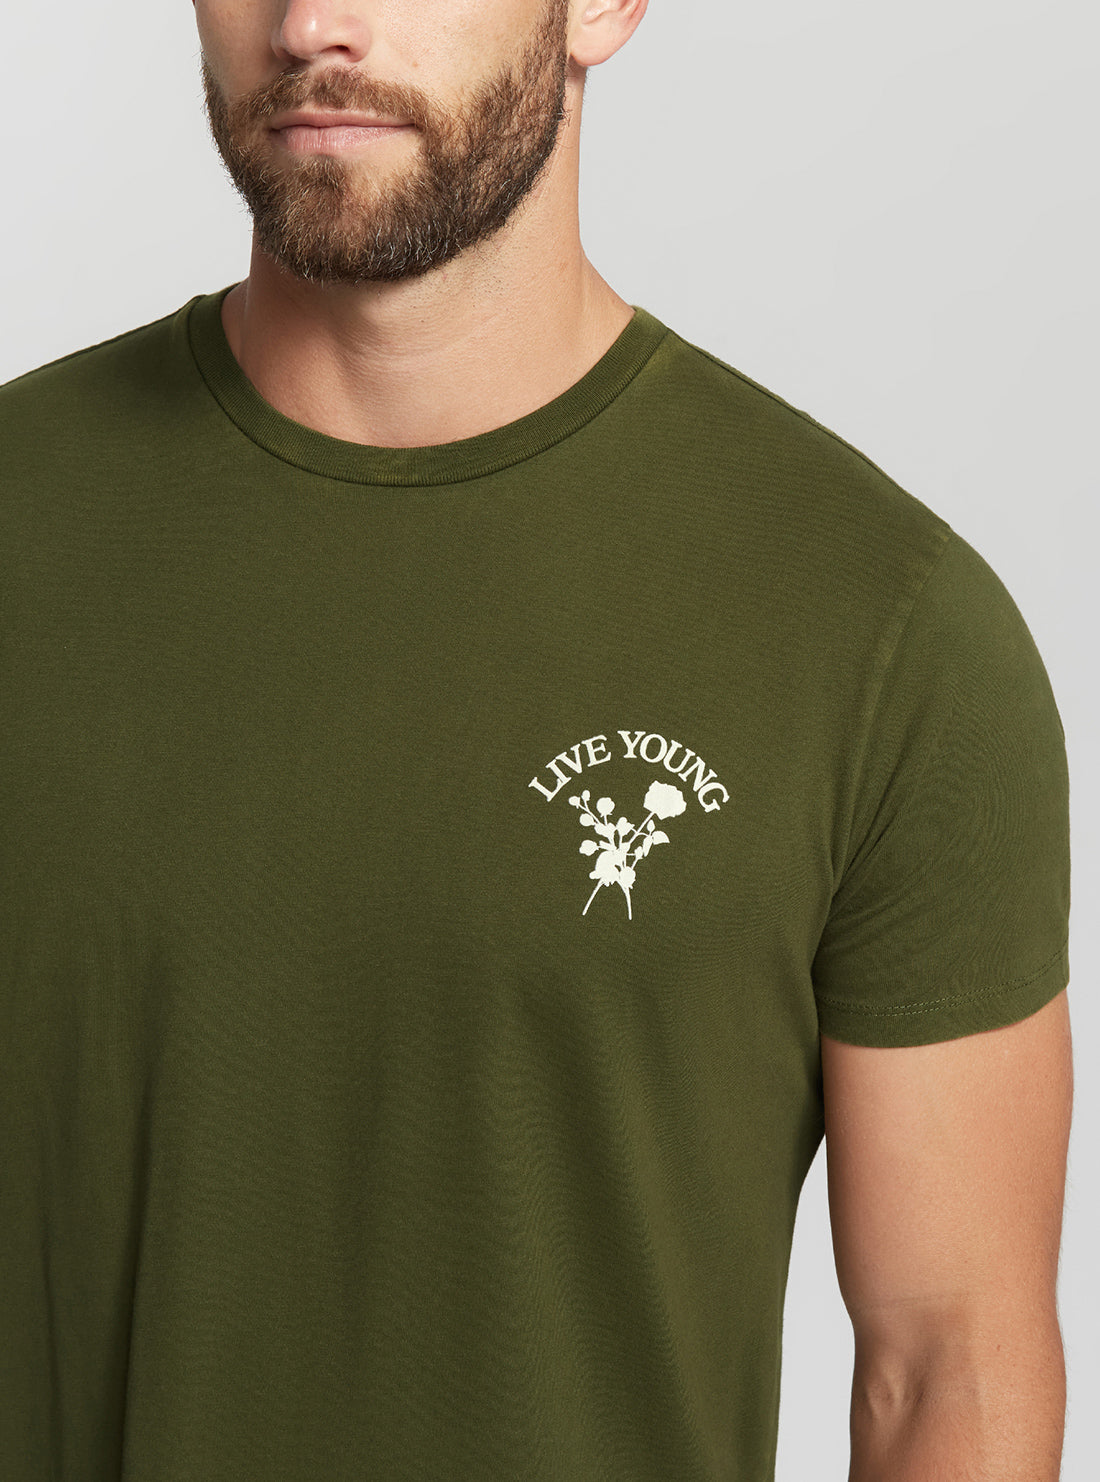 GUESS Men's Green Multi Live Young T-Shirt M2BI74KBDL0 Detail View